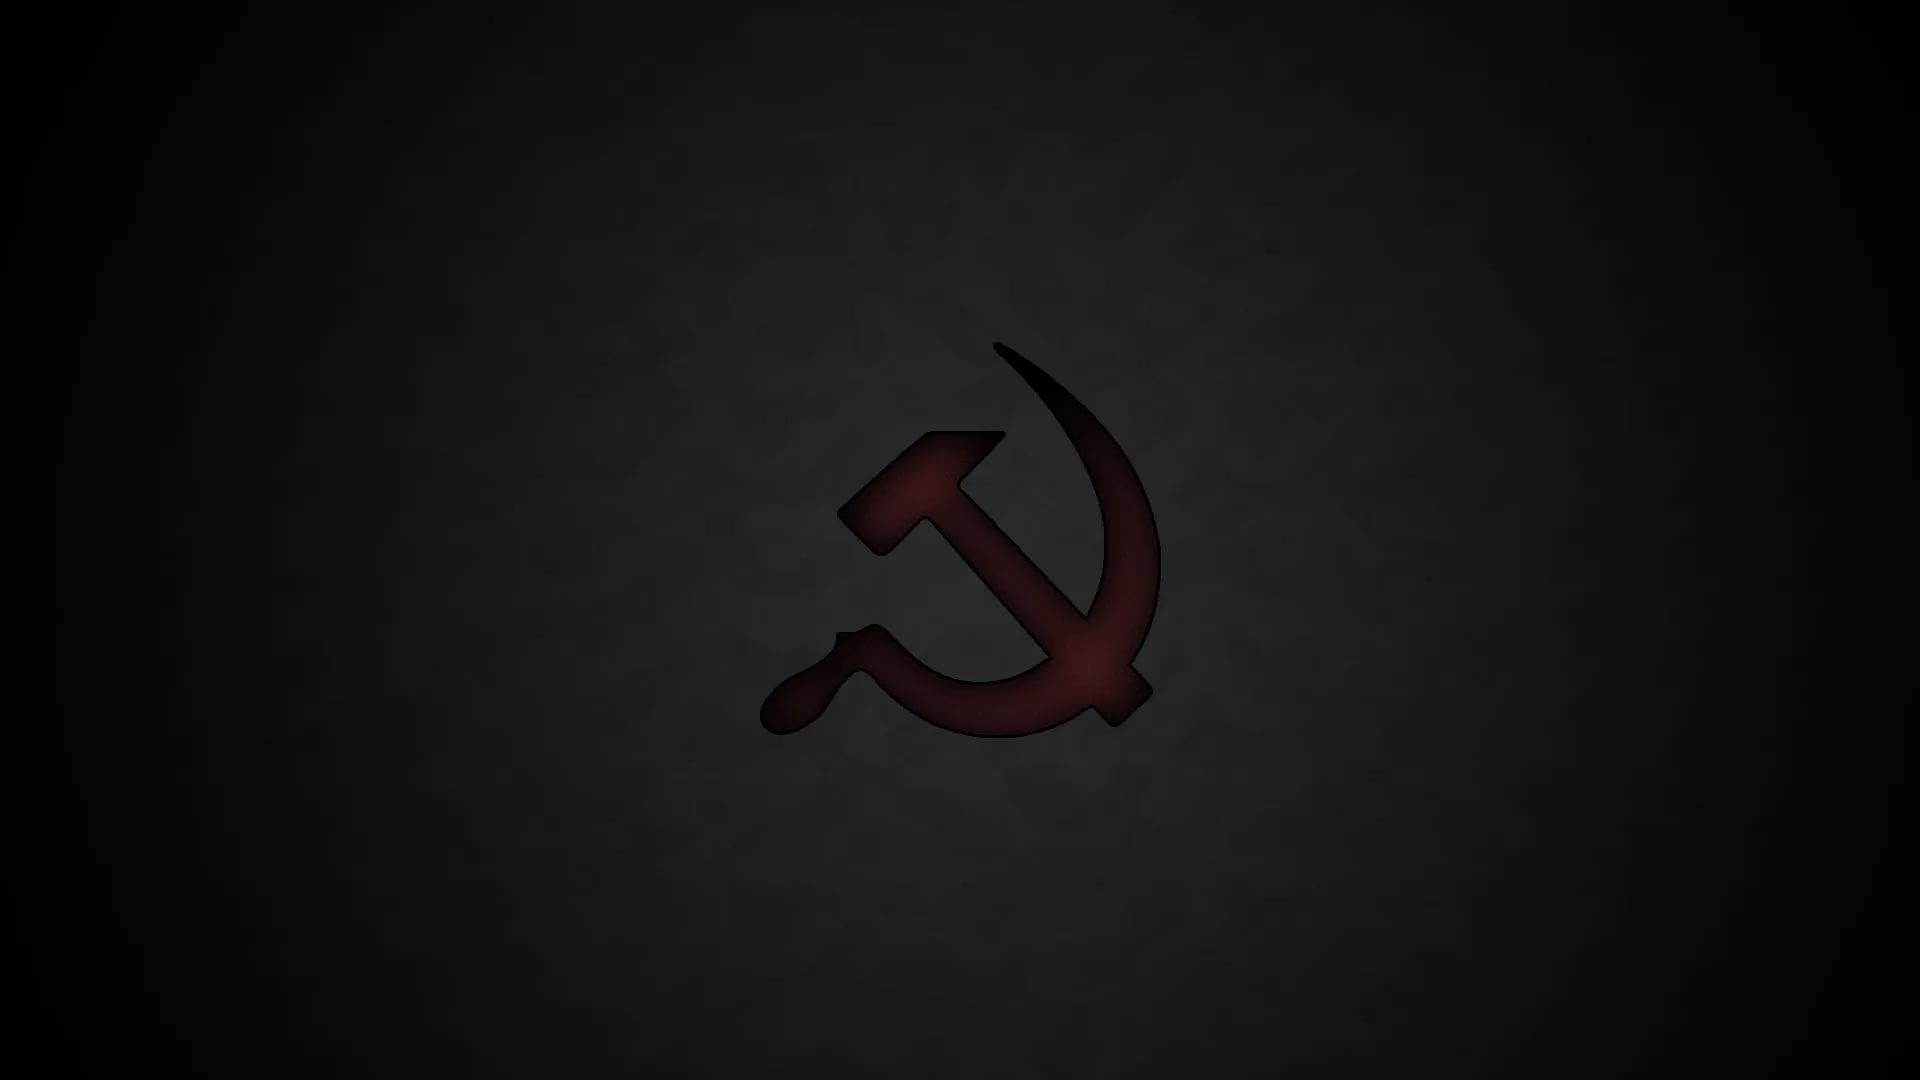 Communism wallpaper photo full hd